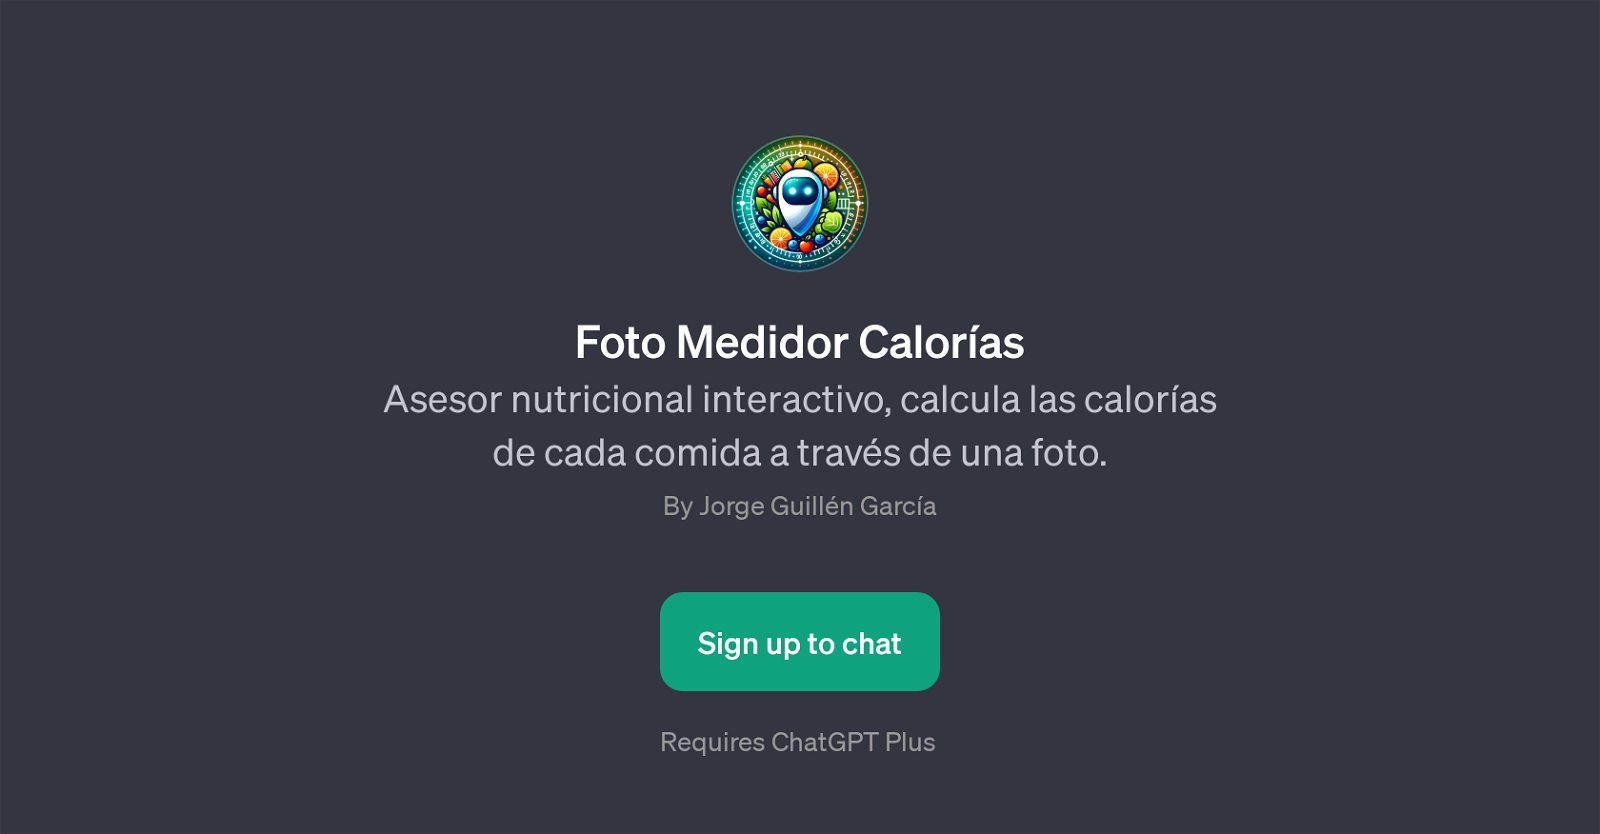 Foto Medidor Caloras website